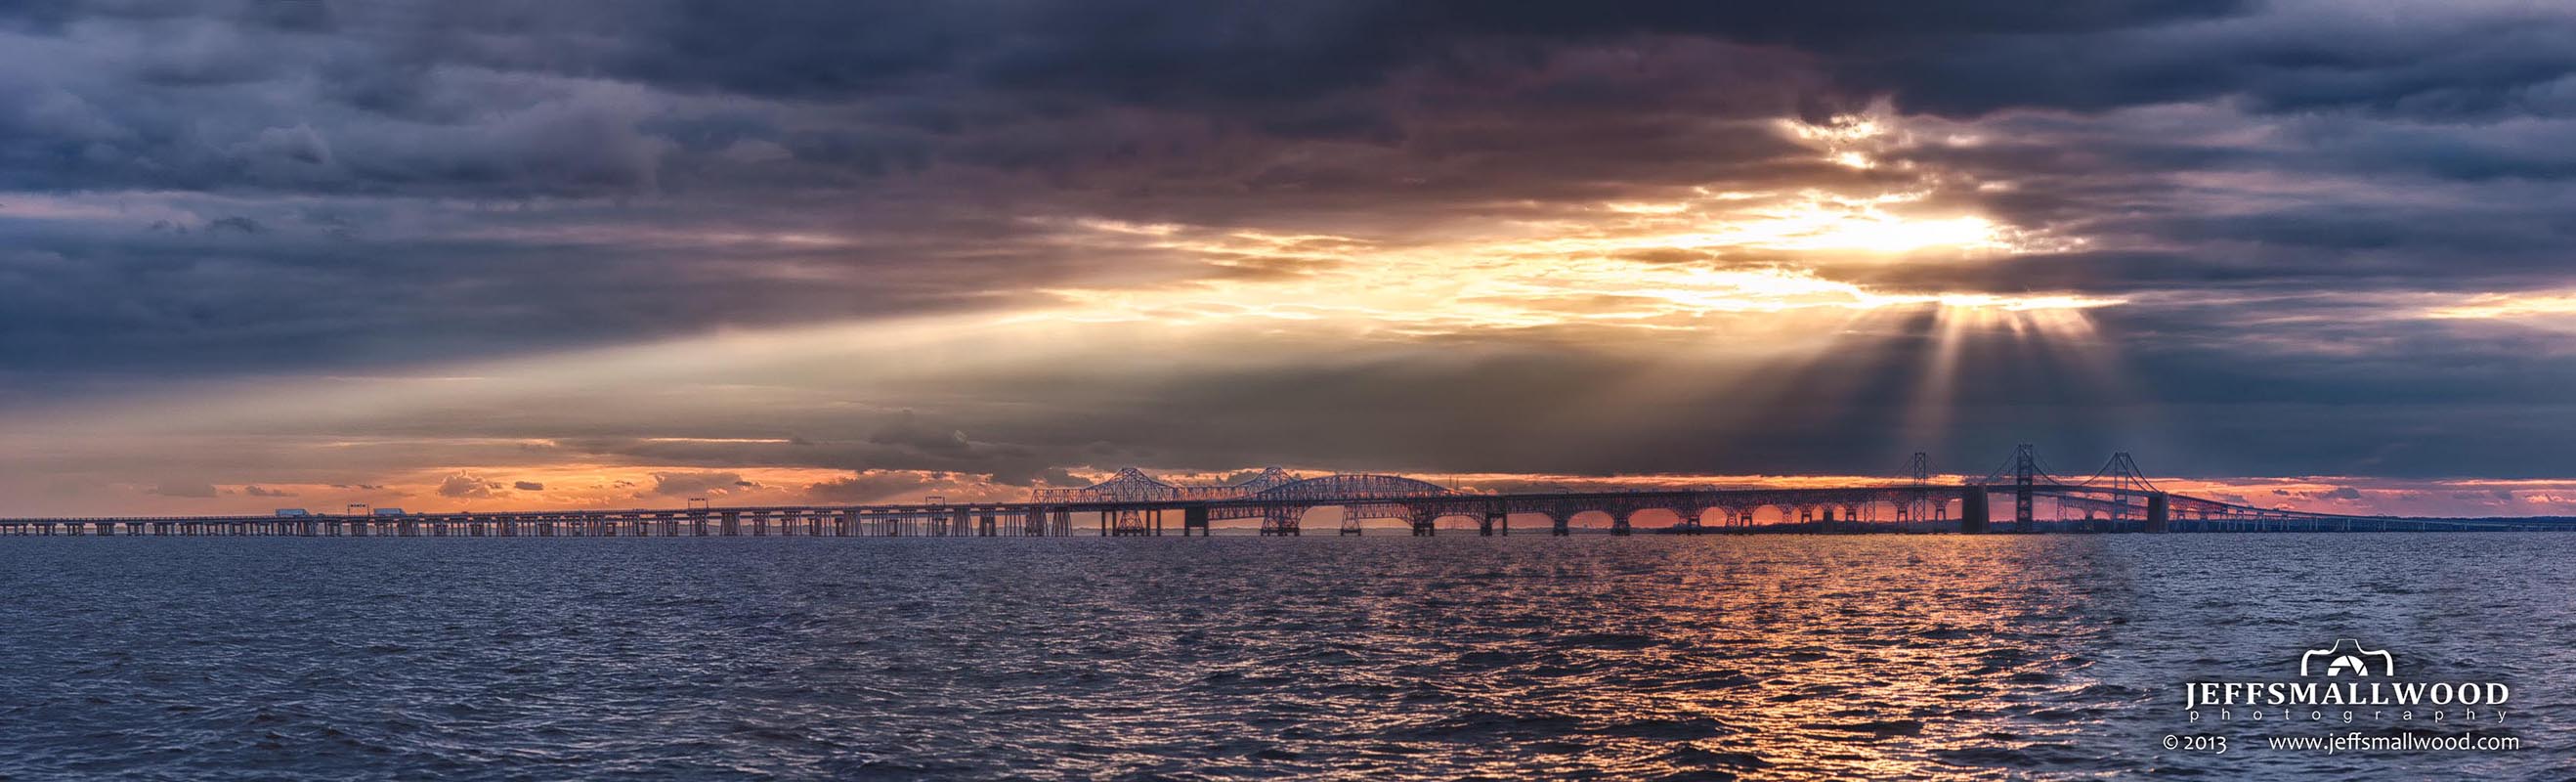 Chesapeake Bay Bridge Sunset   Jeff Smallwood Photography